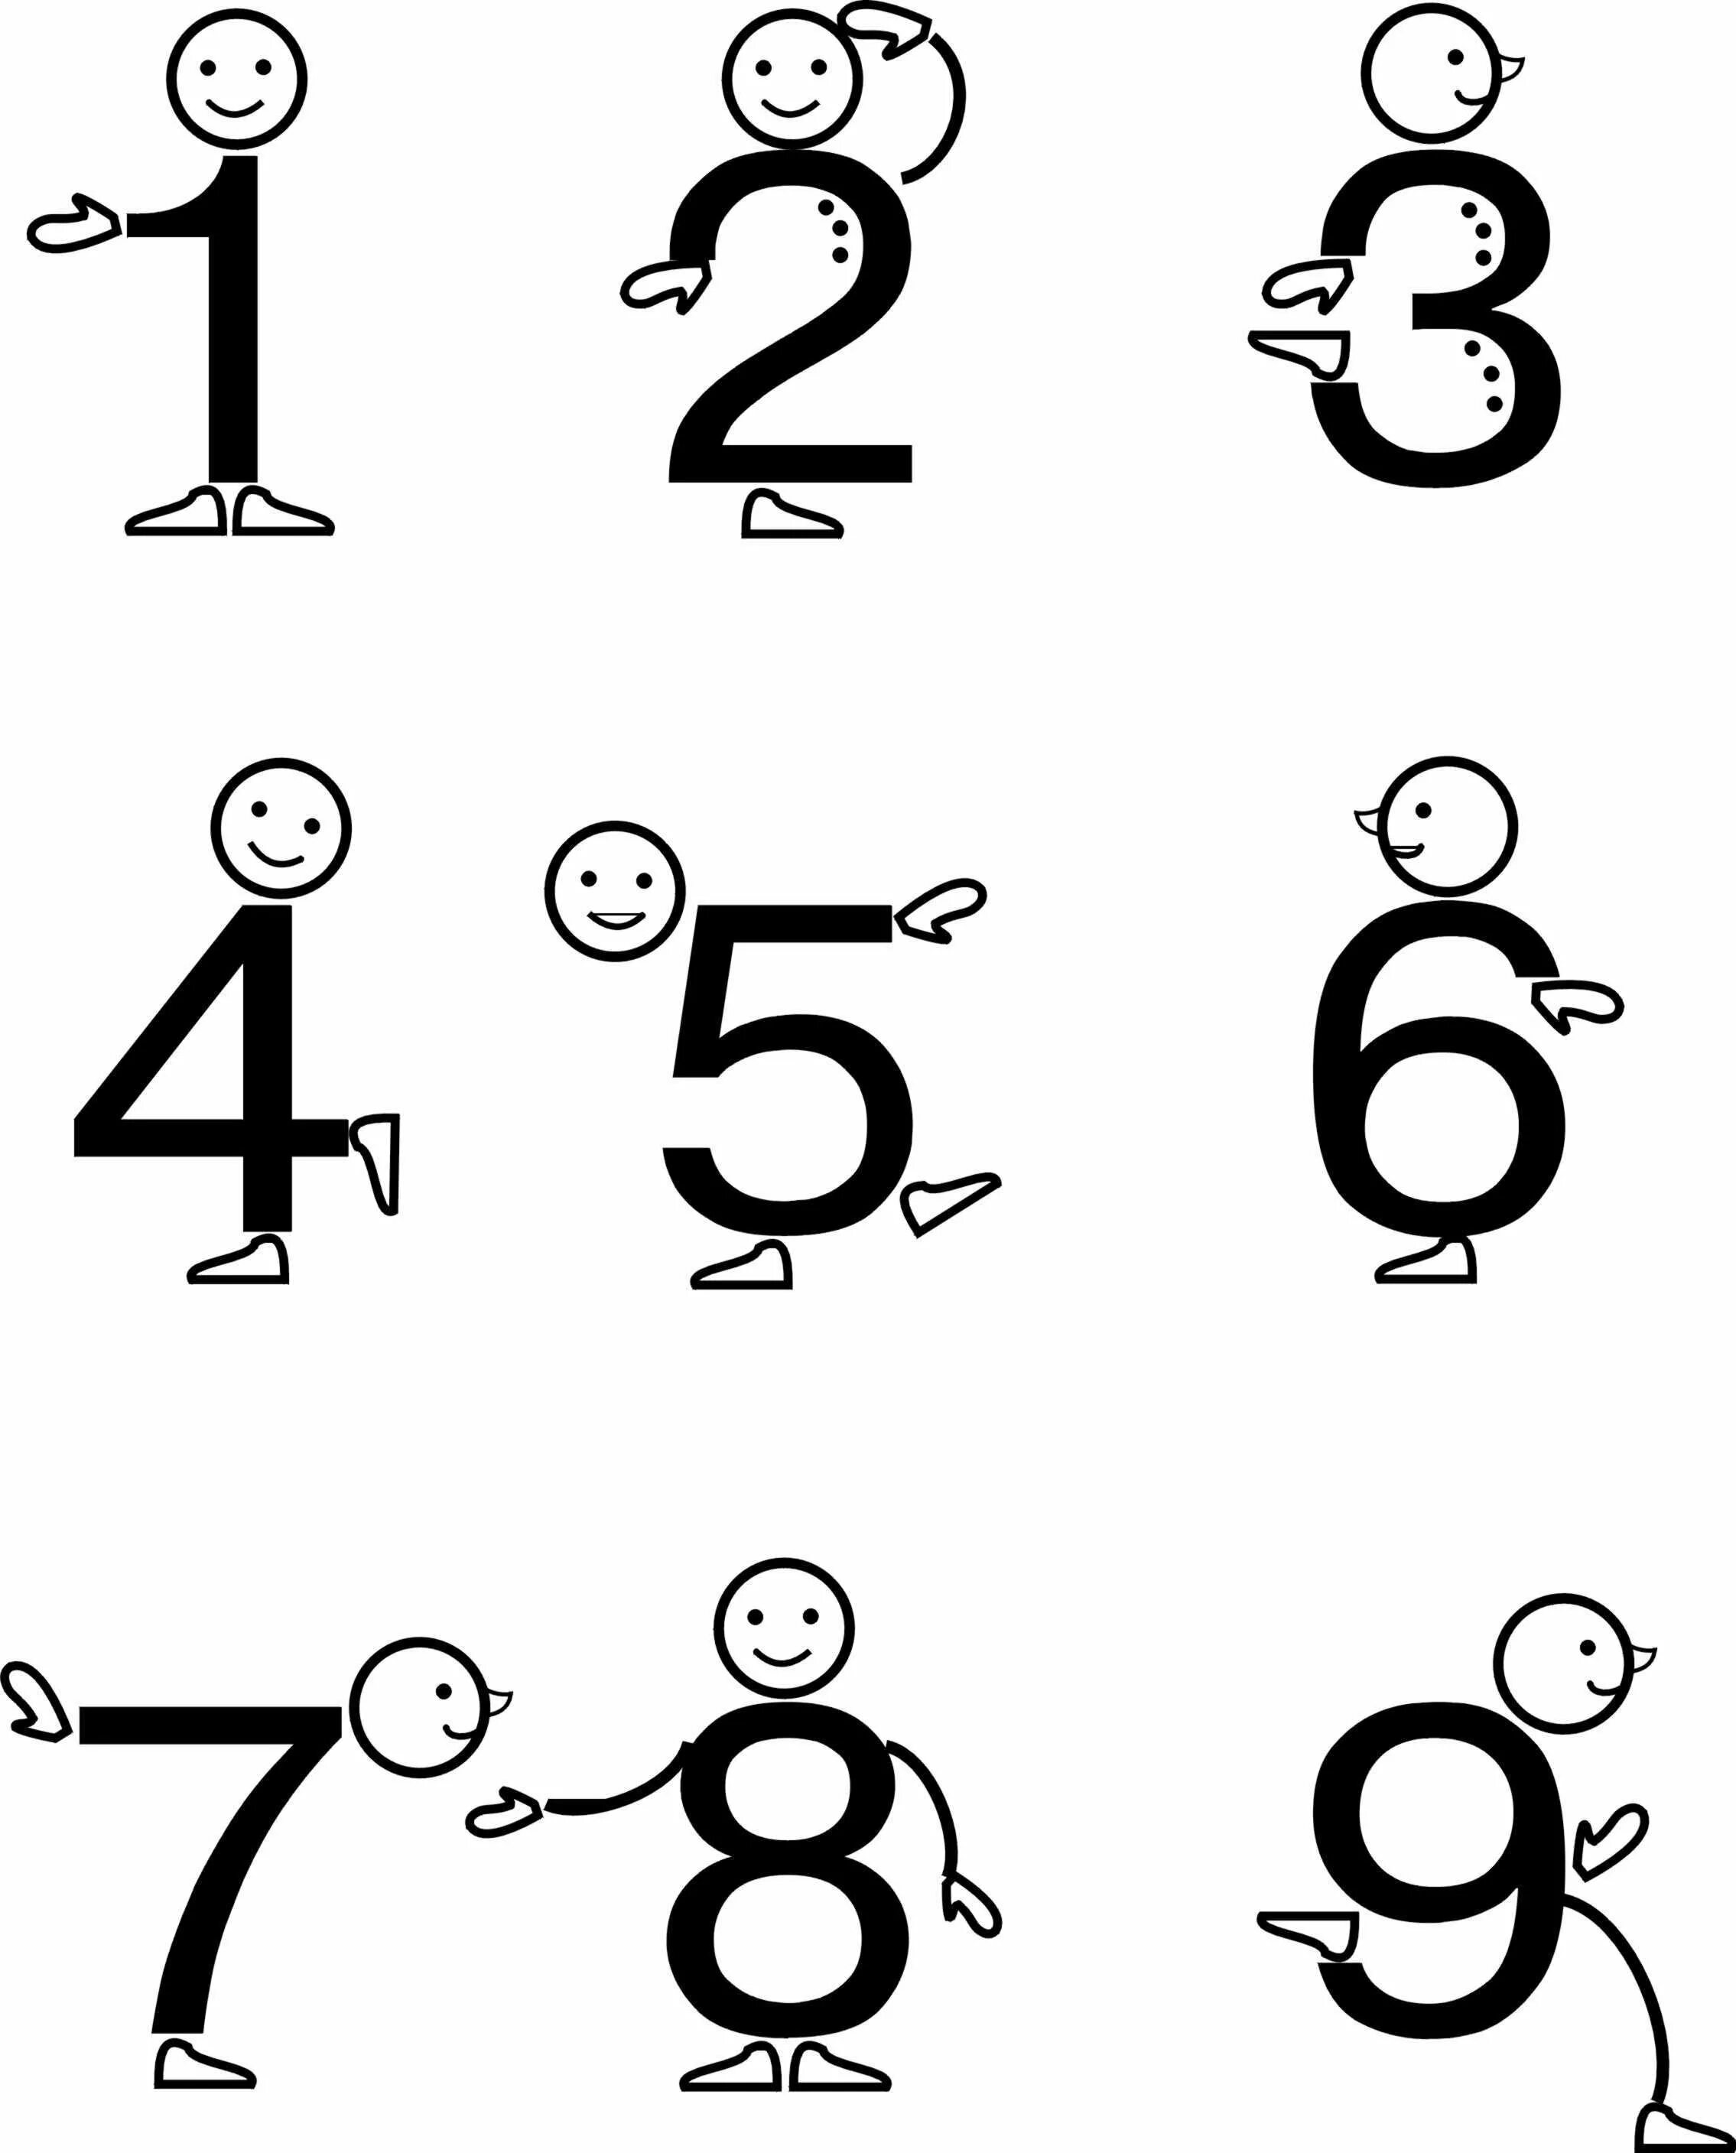 Нарисуйте картинки цифрами. Цифры в виде человечков. Человечек из цифр рисунок. Цифры в виде человечков для детей. Образ человечков в цифрах.